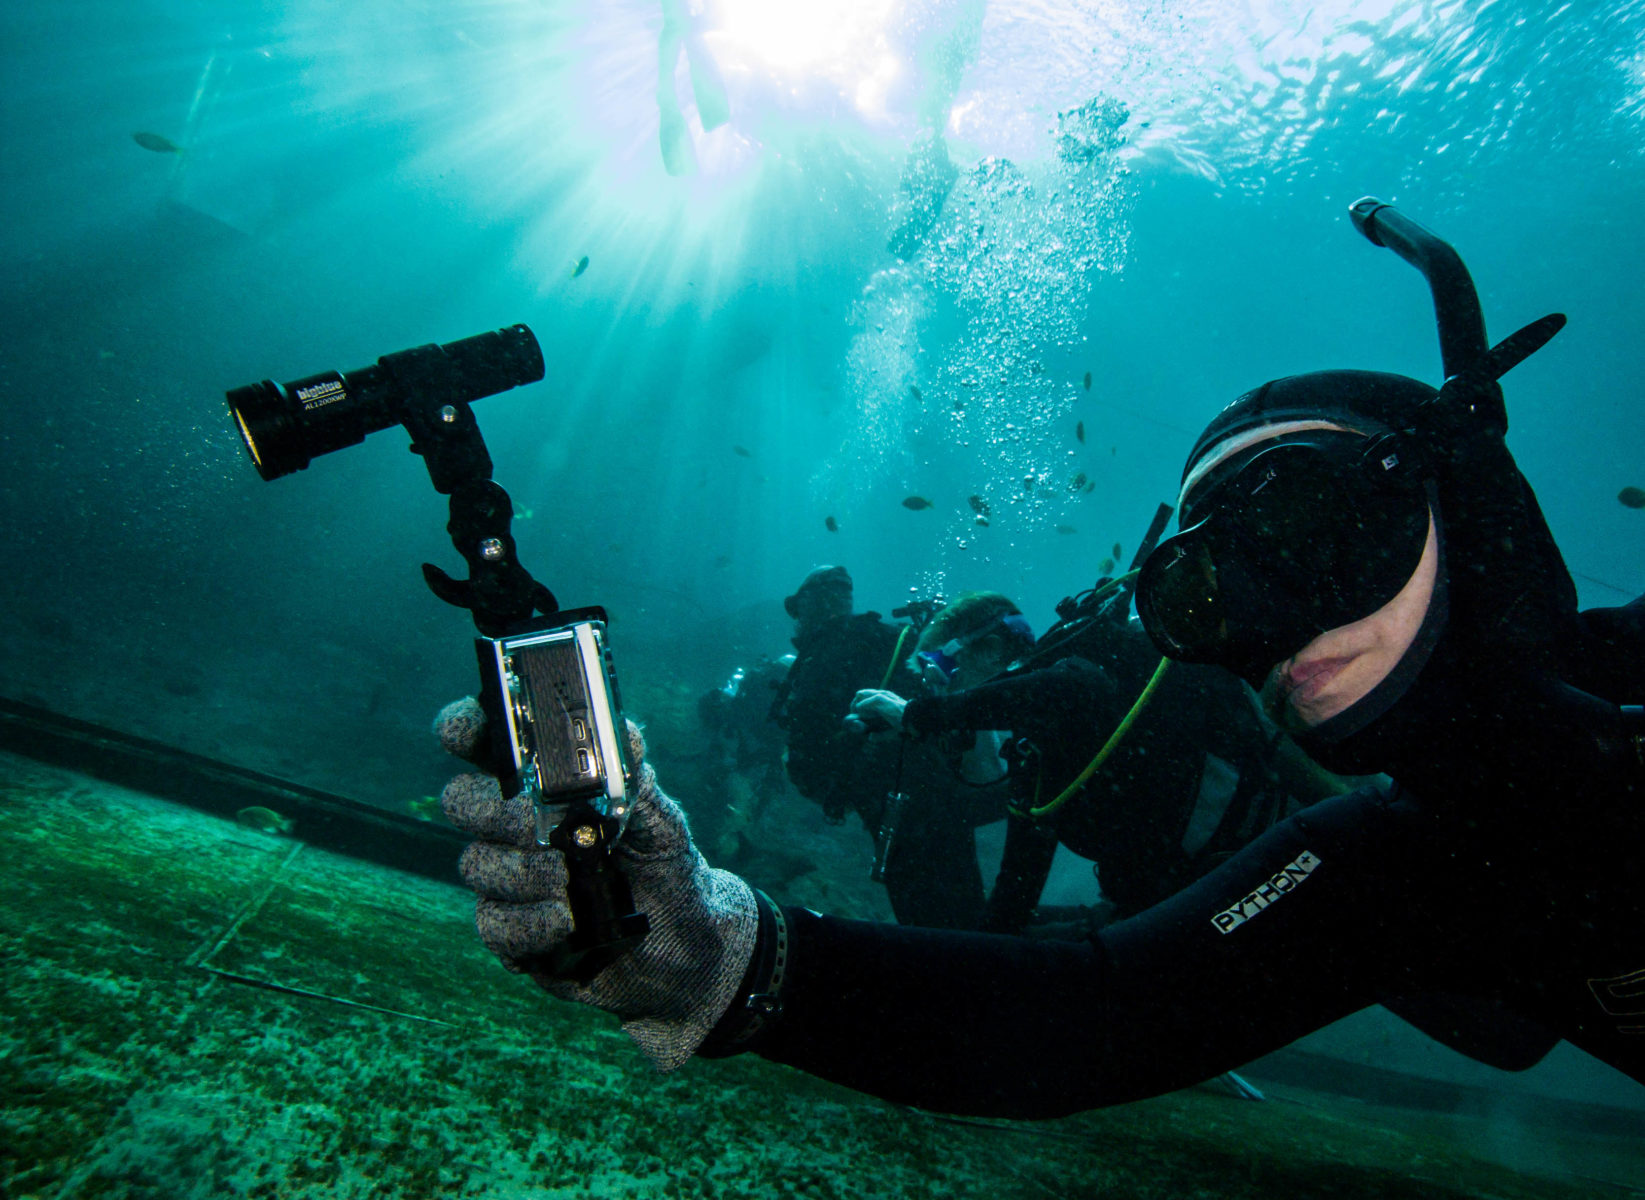 Bigblue underwater light photo gallery